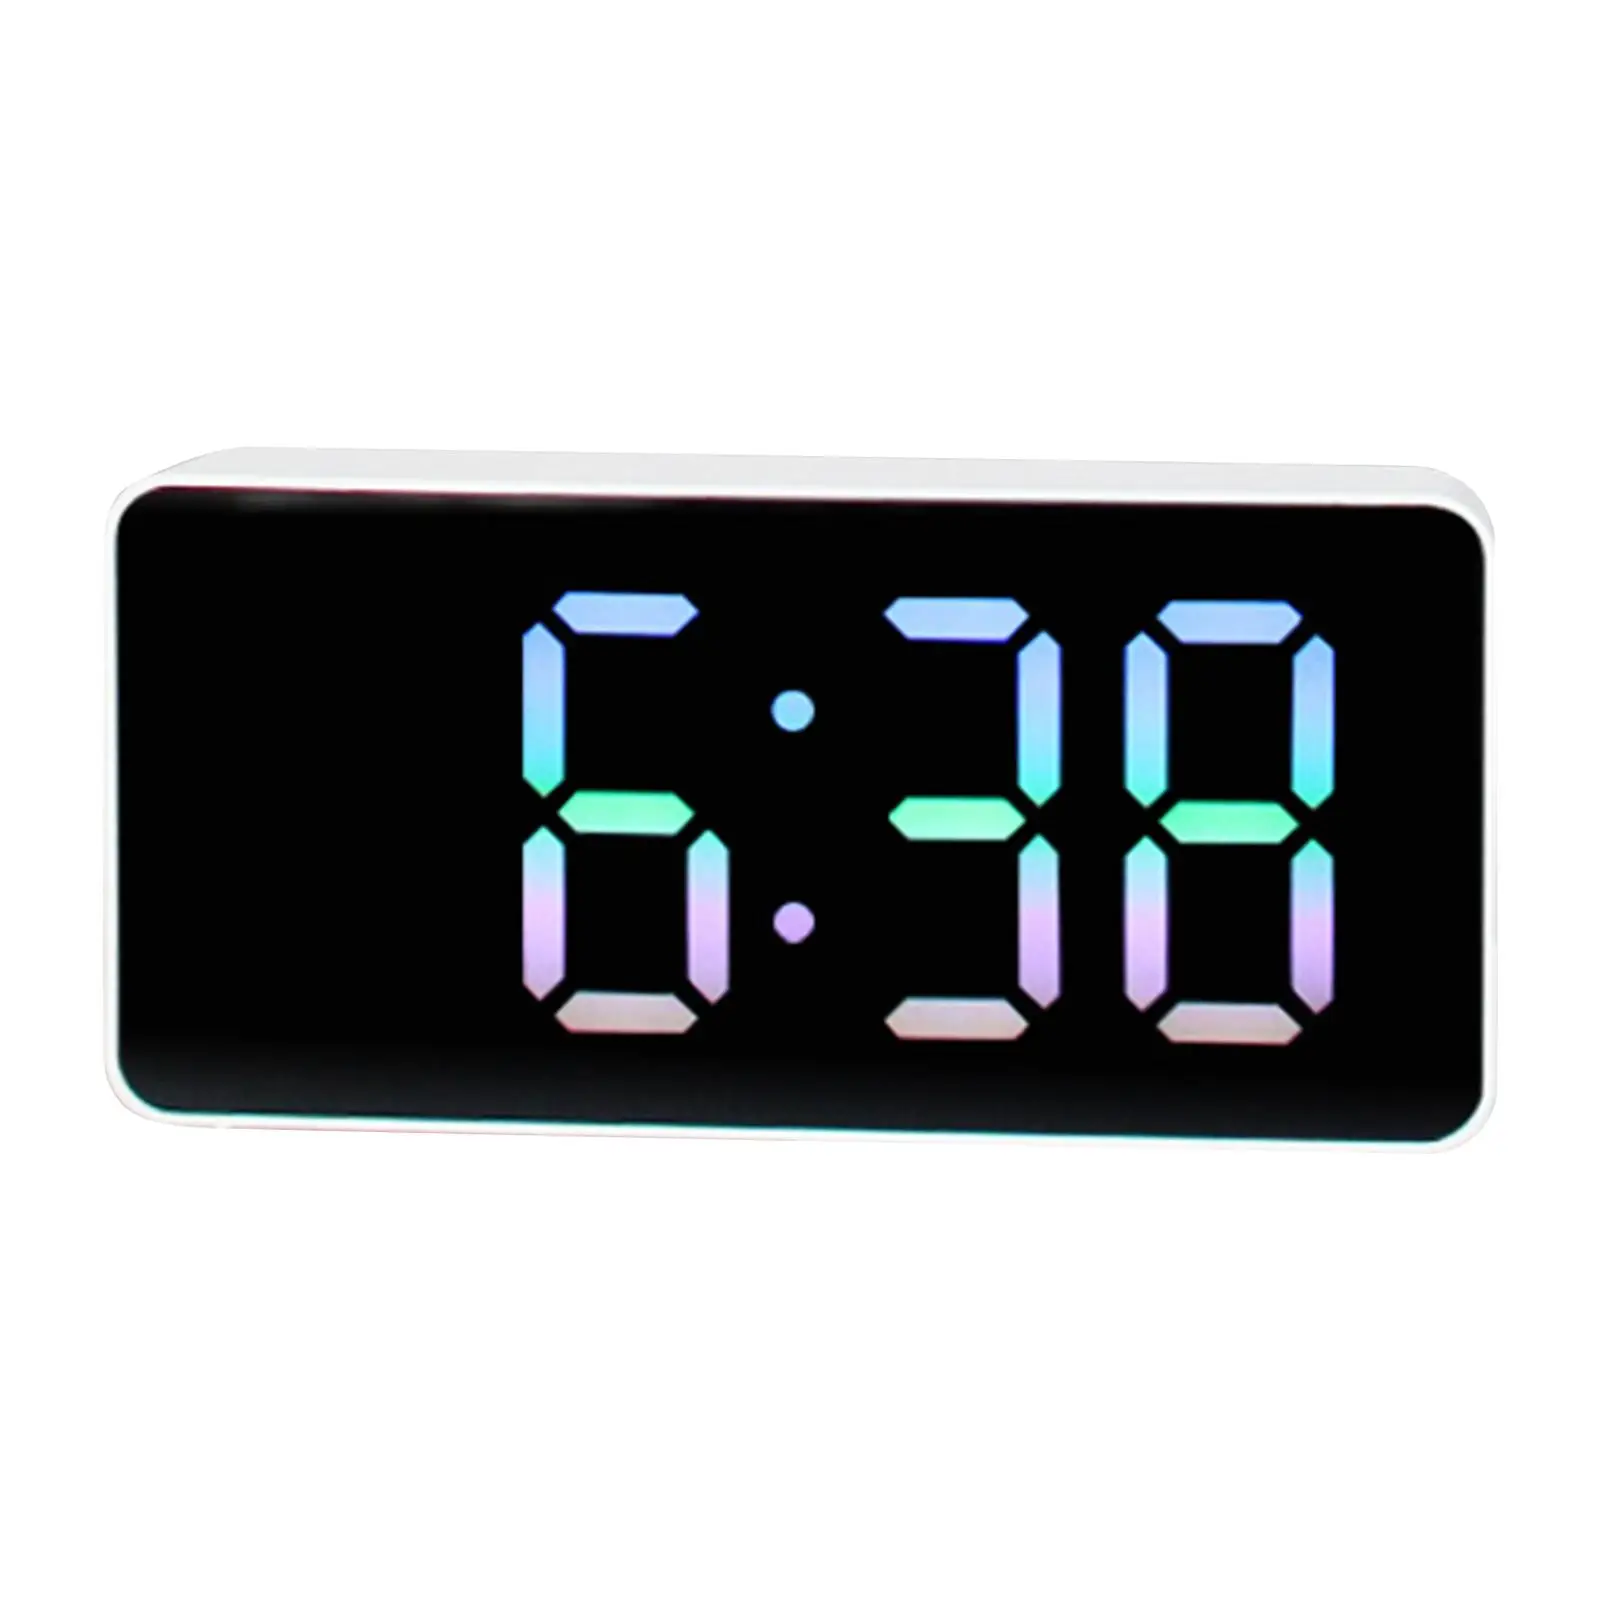 Digital alarms Clock 12/24H Voice Control Calendar USB Charging Electronic Clock Desk Clock for Bedside Cafe Home Living Room